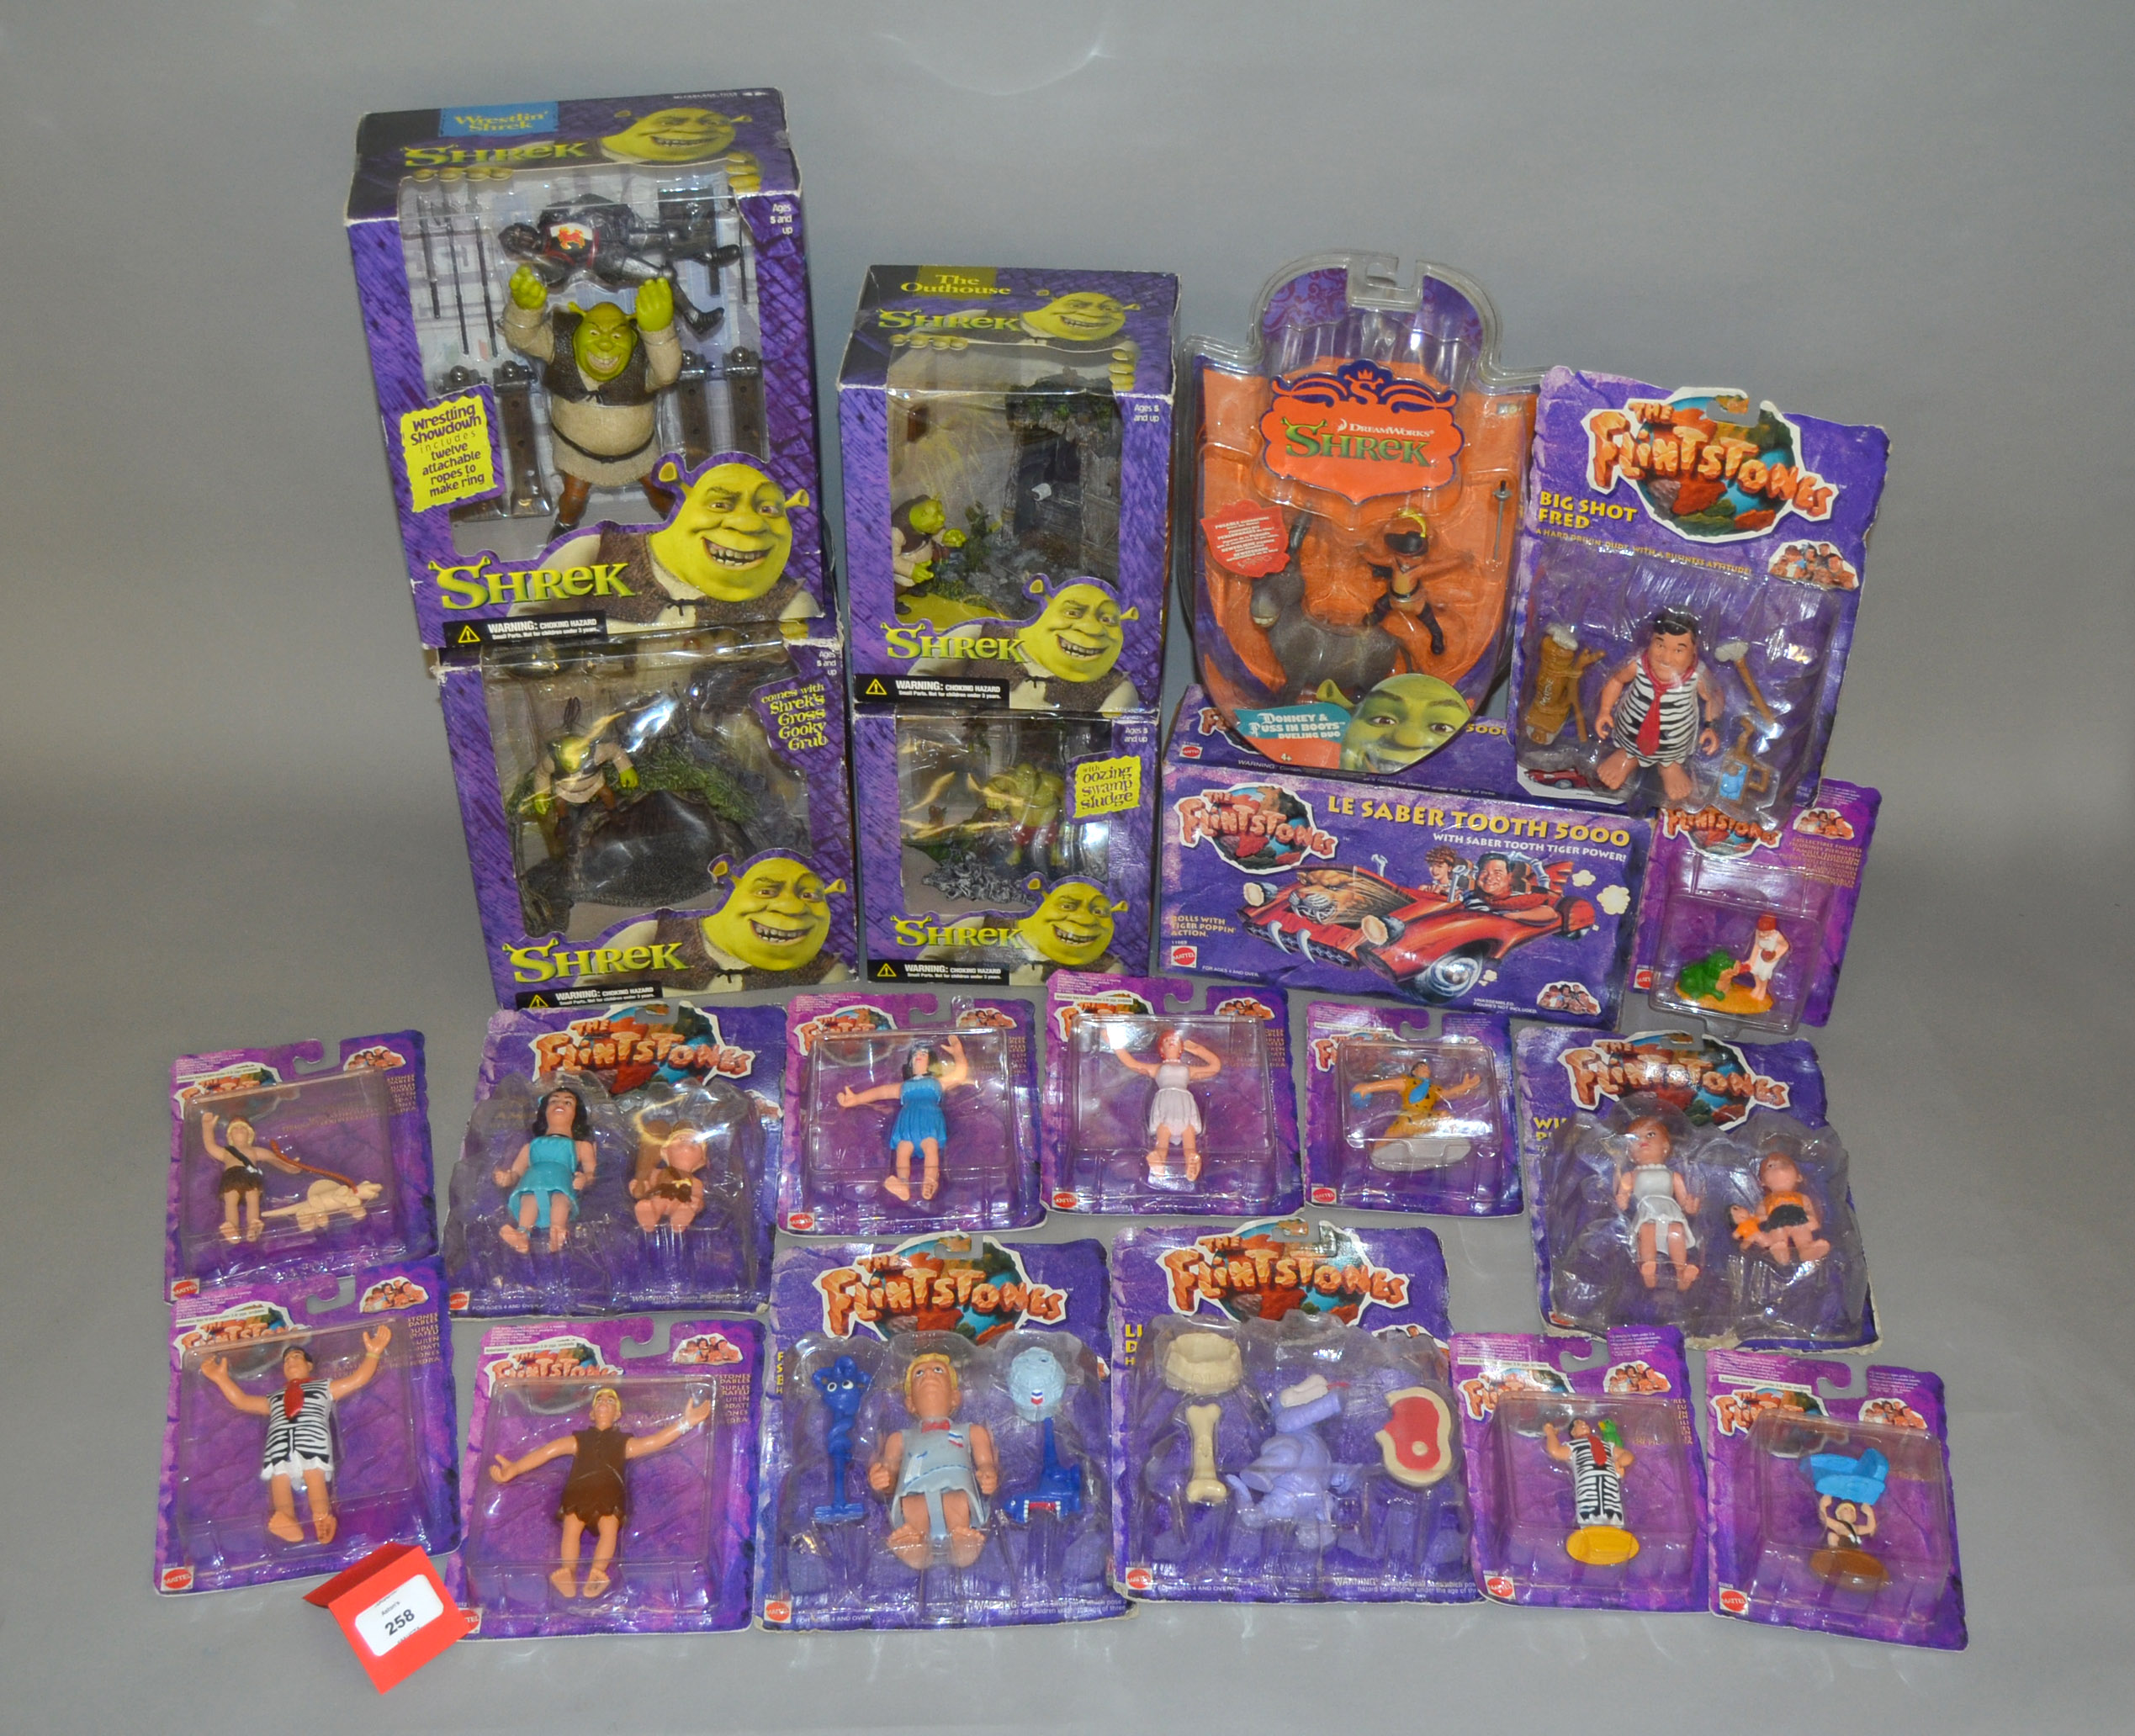 Quantity of children's toys, McFarlane Shrek and Mattel Flinstones. All boxed/carded, appear G-VG.